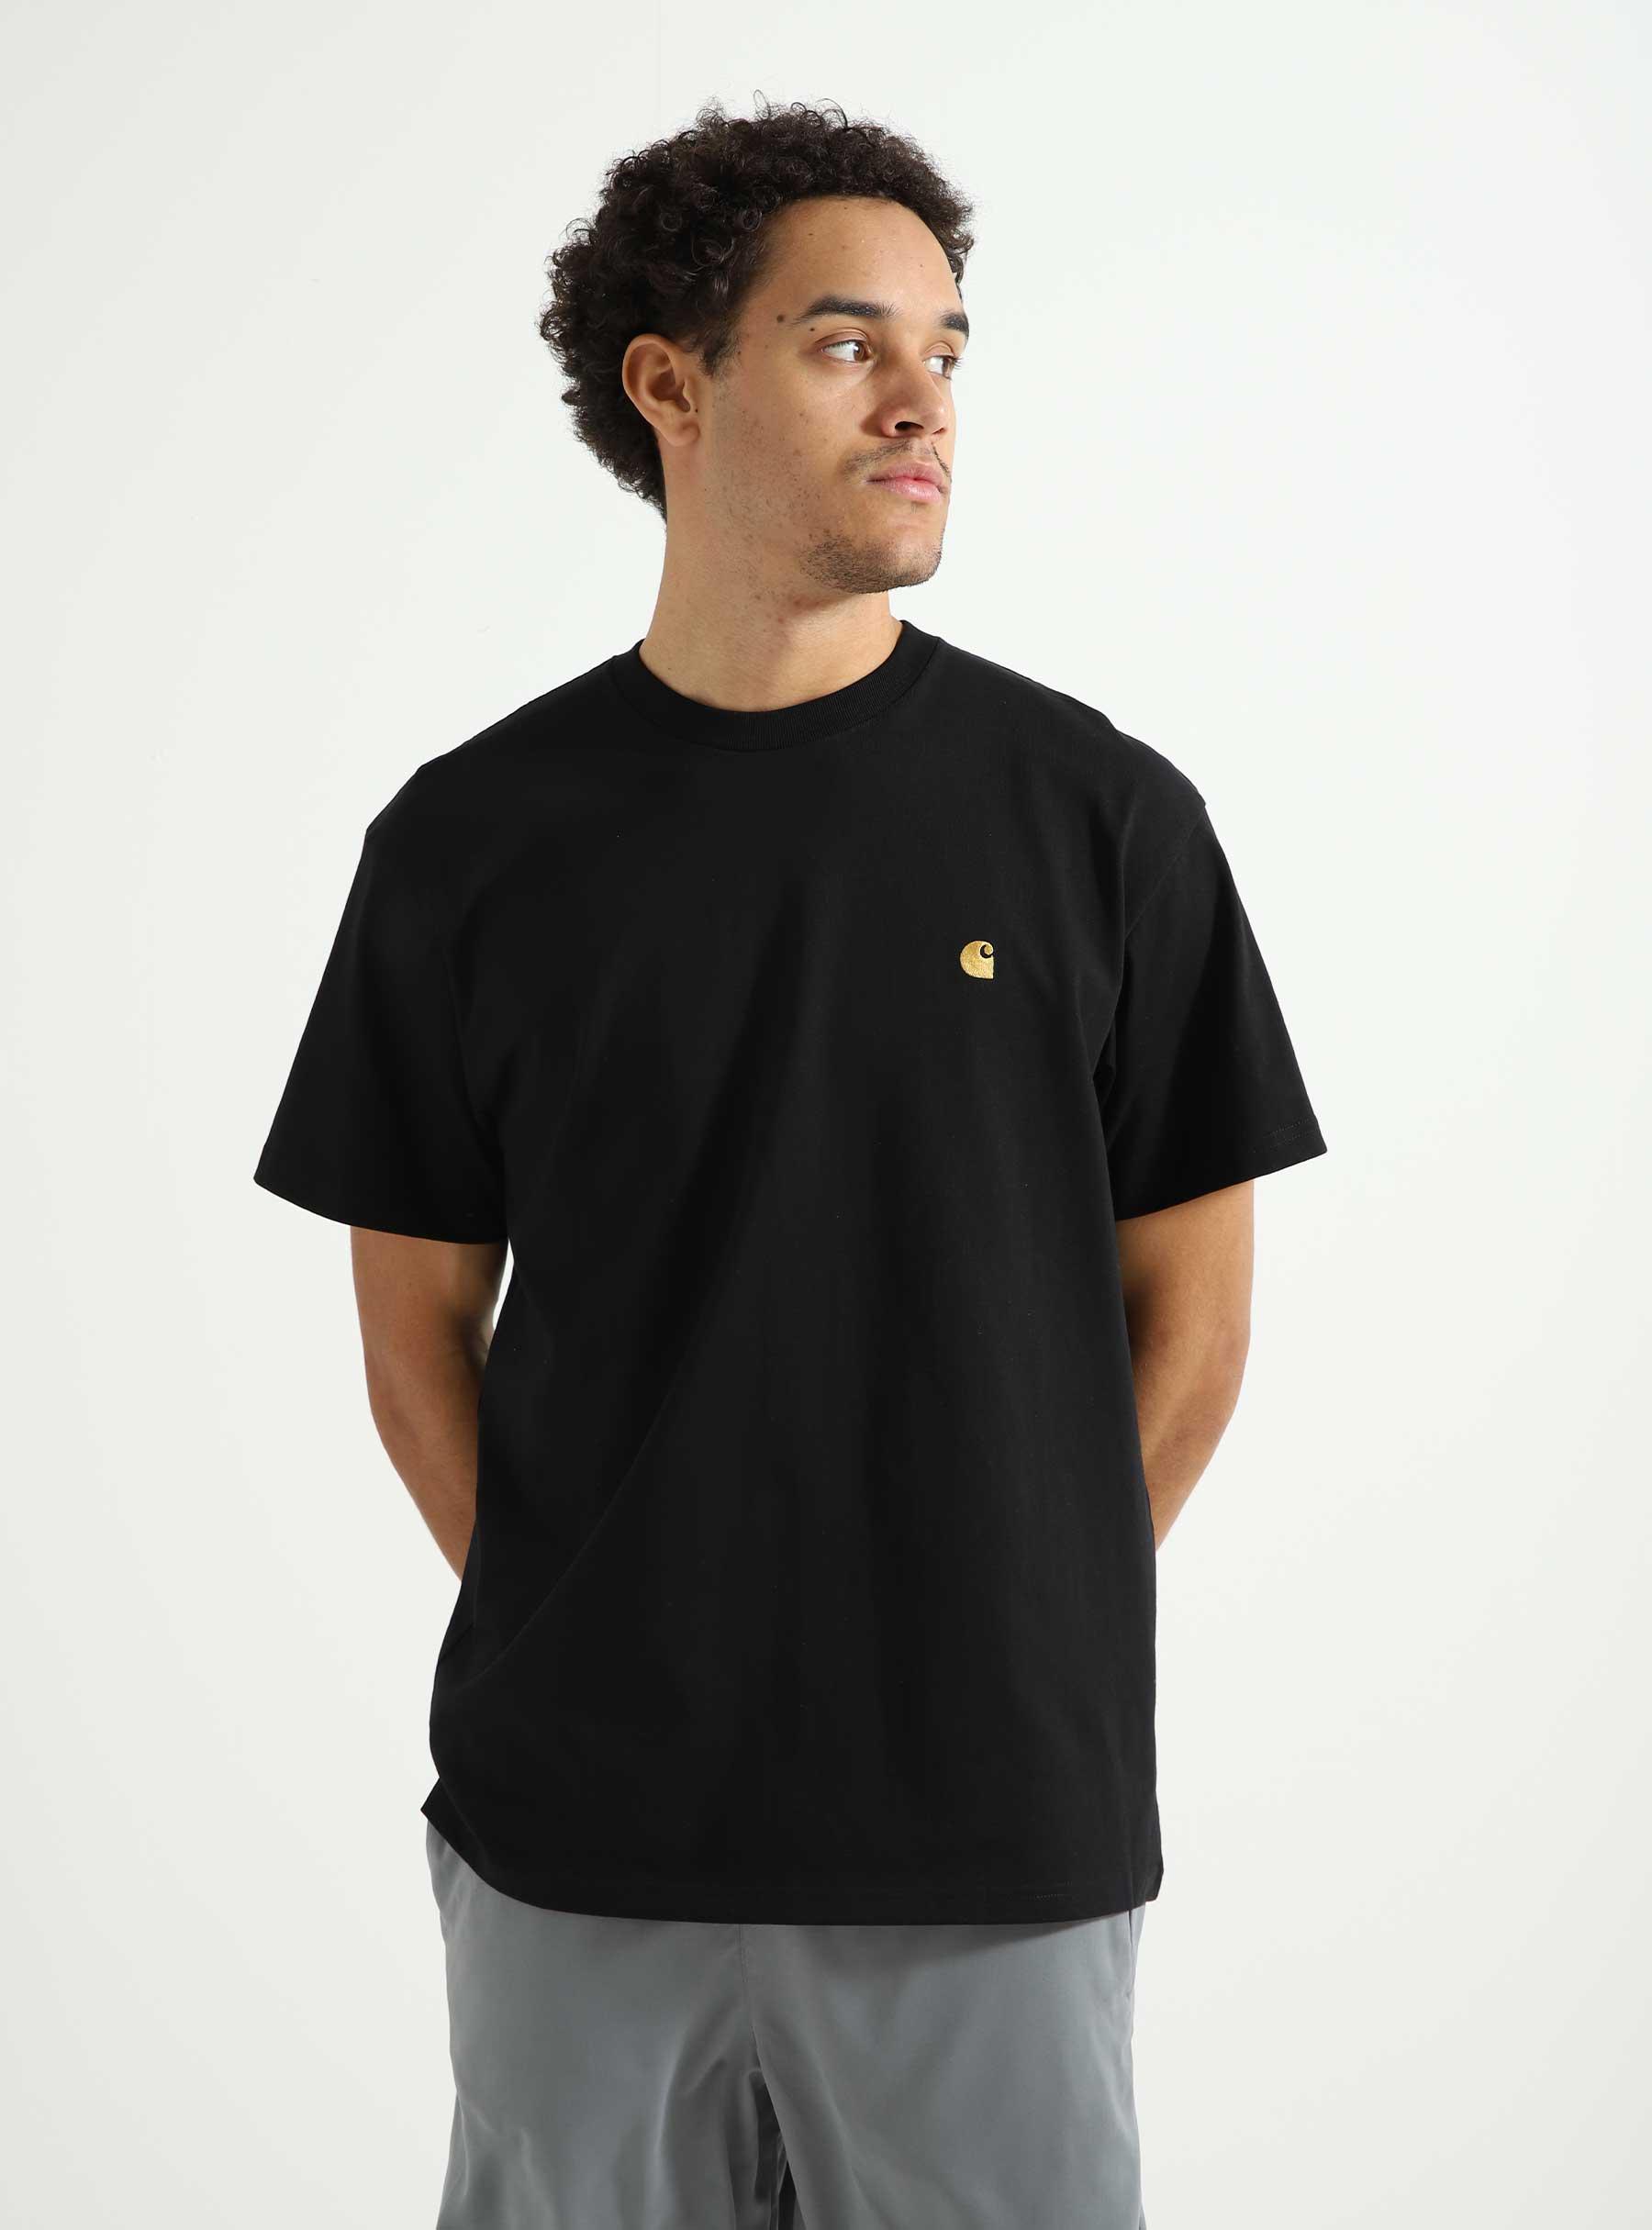 S/S Chase T-Shirt Black Gold I026391-00FXX